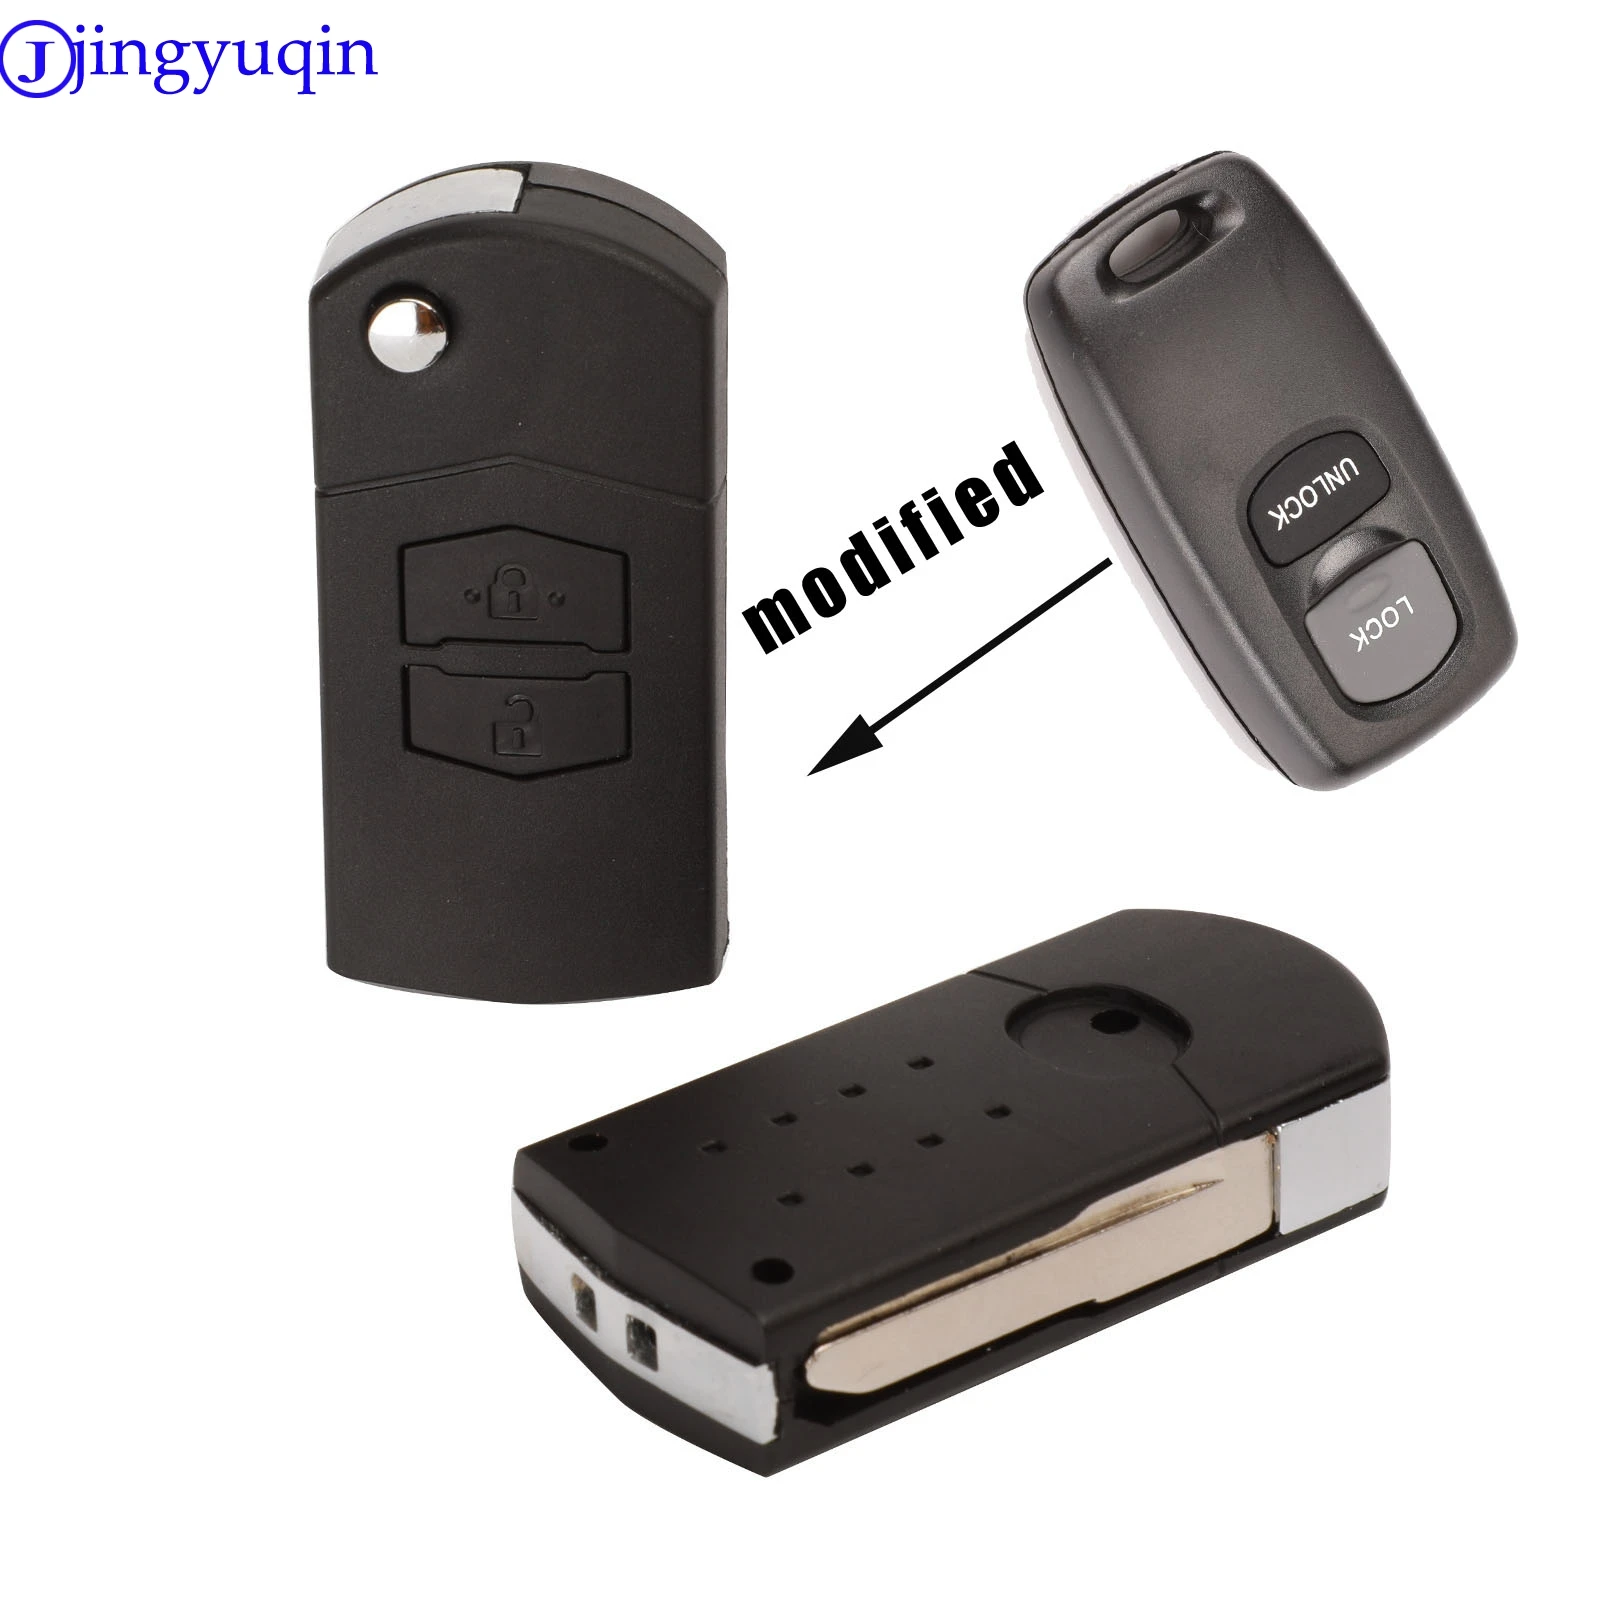 jingyuqin Key Case for MAZDA 3 MAZDA 6 Car Key 2 Buttons Remote Key Modified Blank Key Shell Cover Uncut Blade